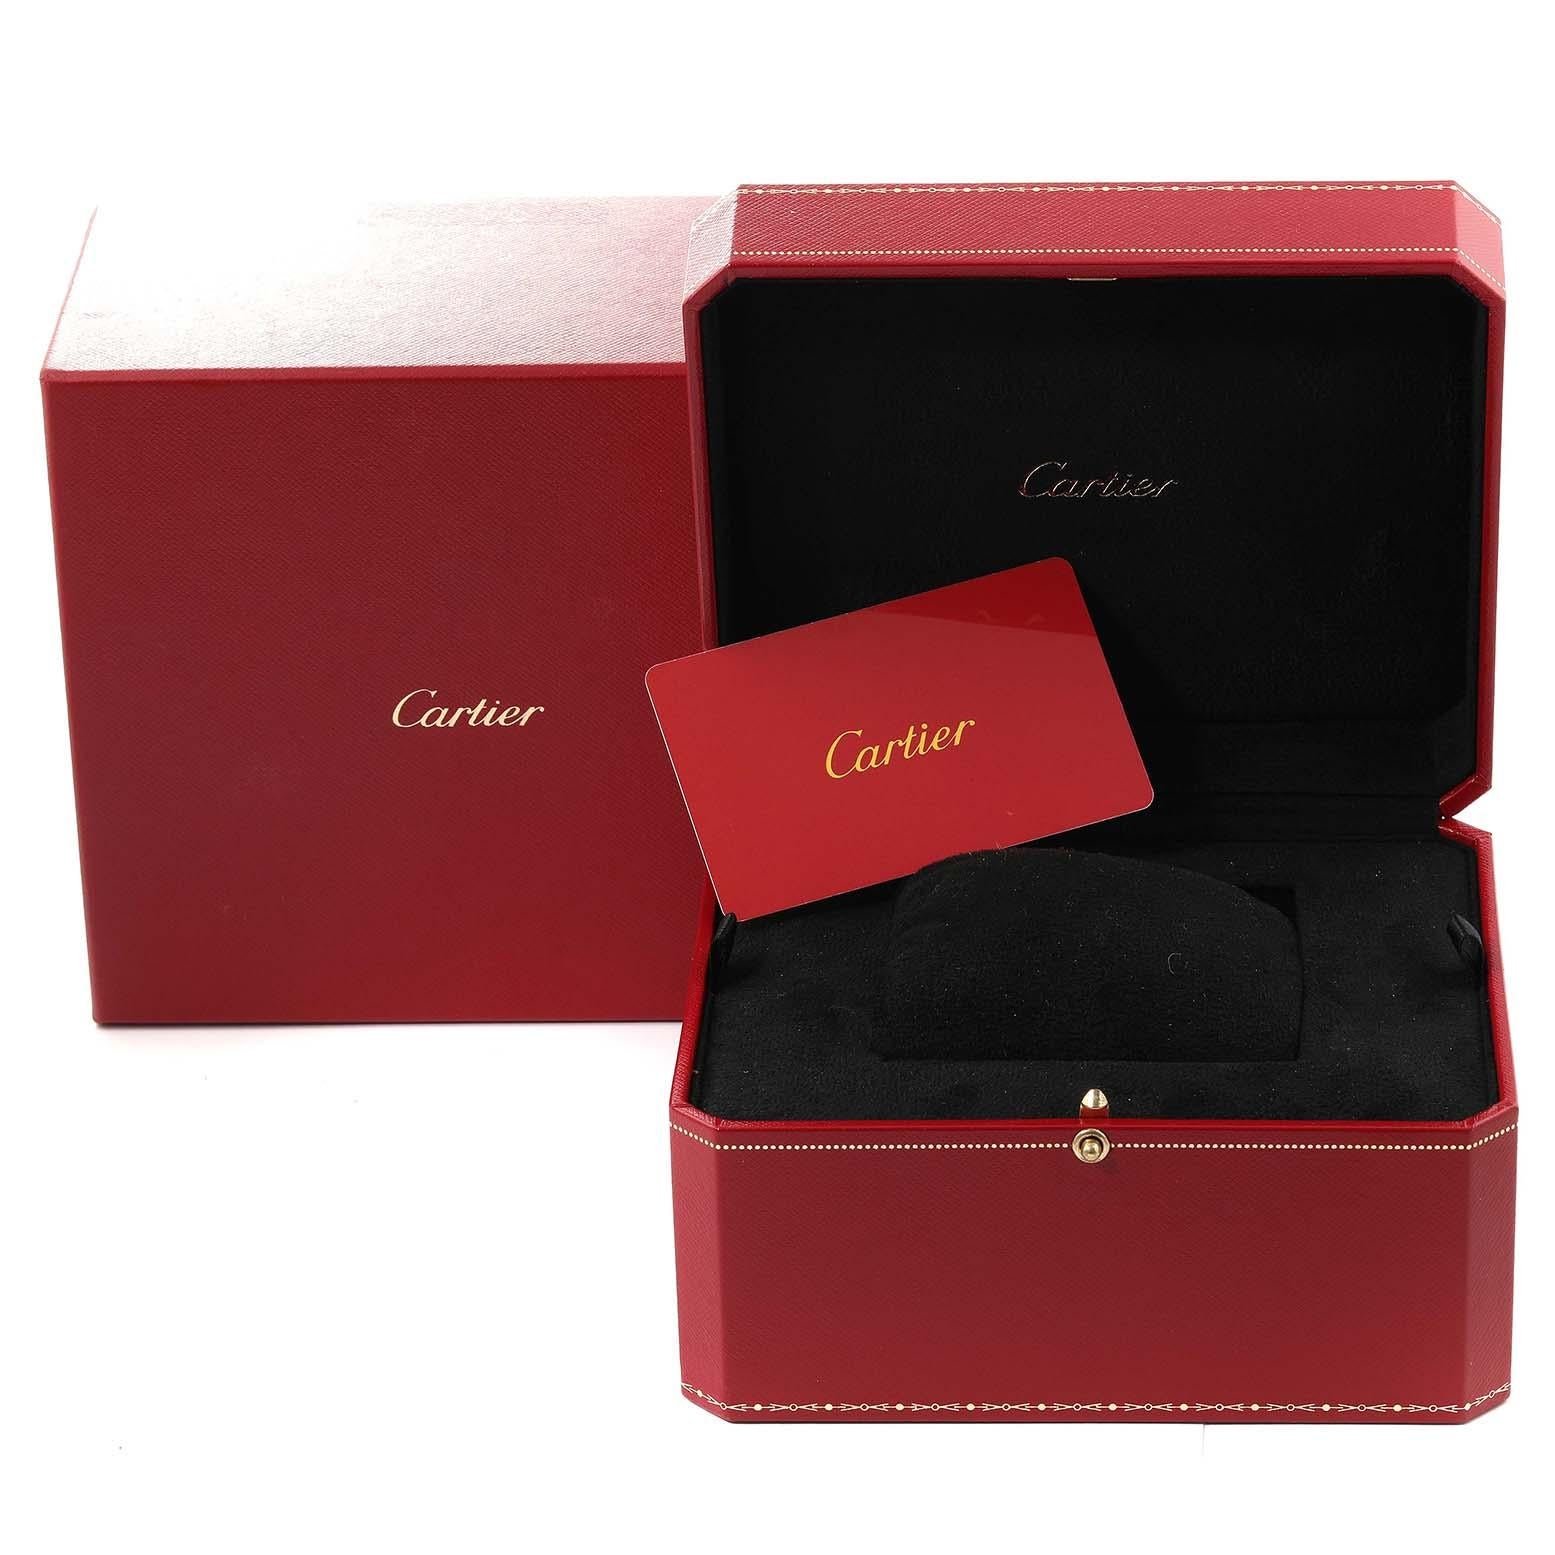 Cartier Tank Americaine Rose Gold Diamond Ladies Watch WB7079M5 Box ...